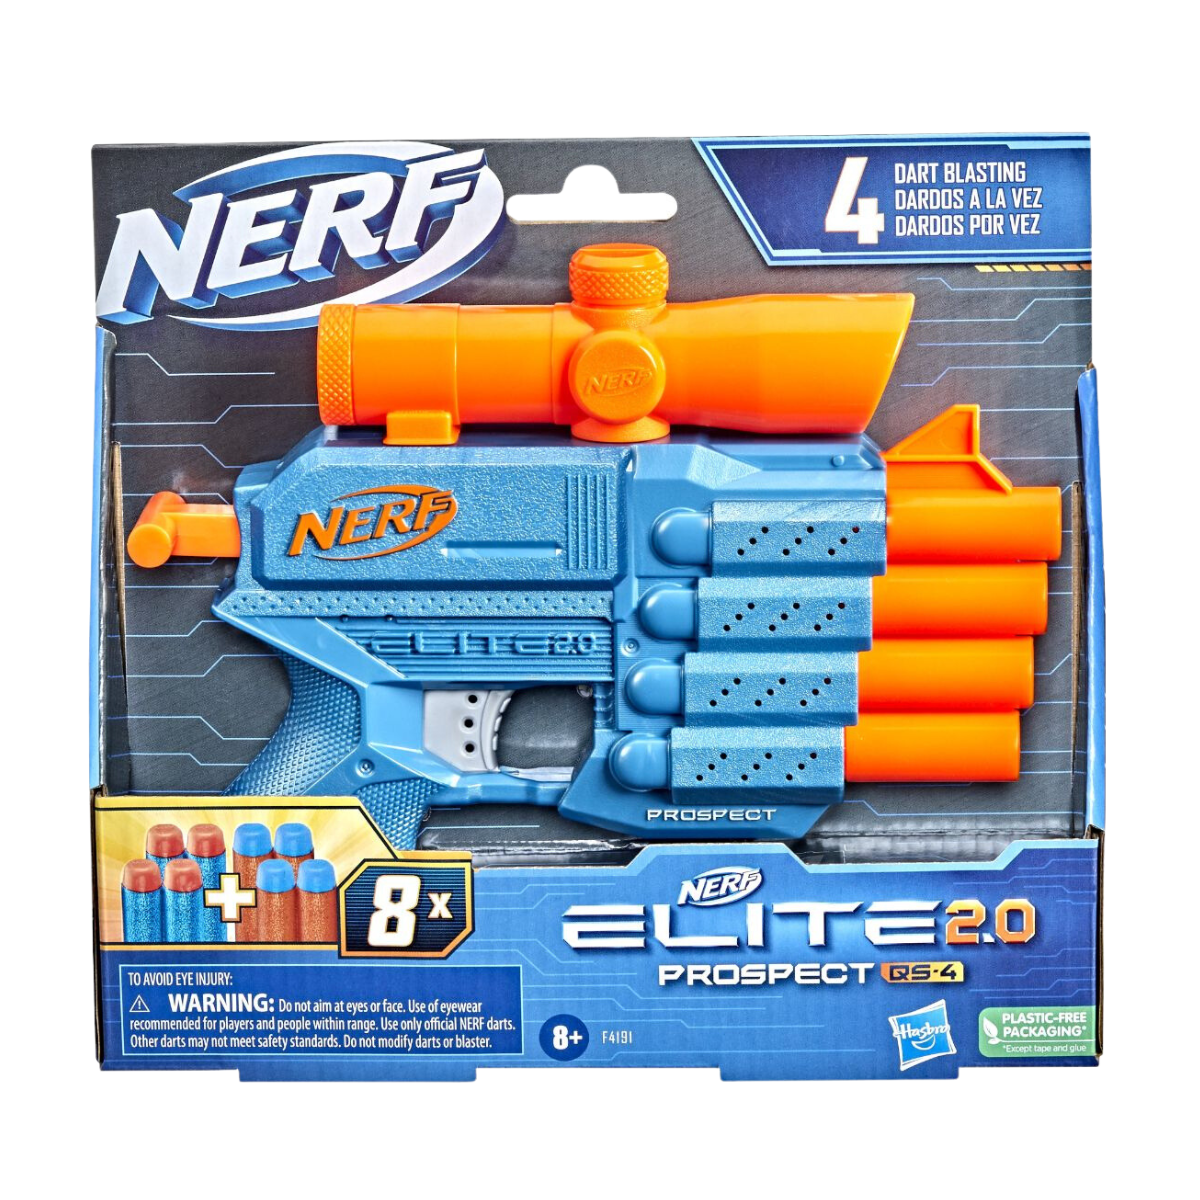 Buy Original Nerf Elite 2.0 Prospect QS4 Dart Blaster with 8 Darts